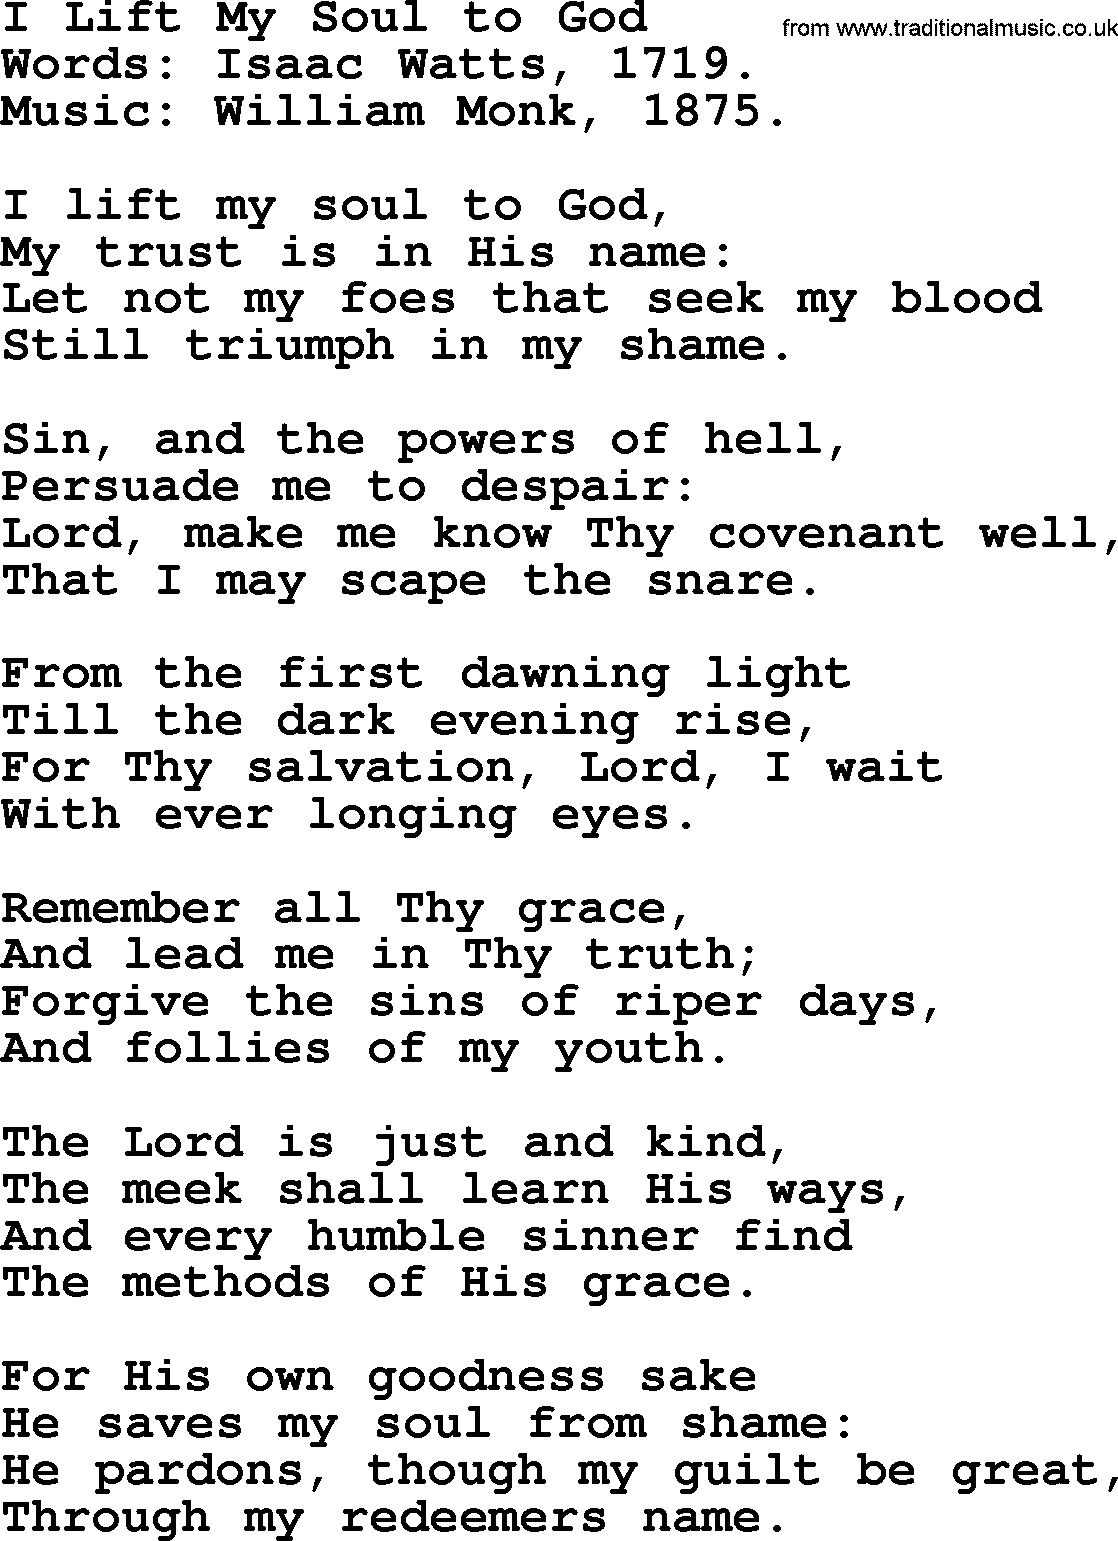 Isaac Watts Christian hymn: I Lift My Soul to God- lyricss